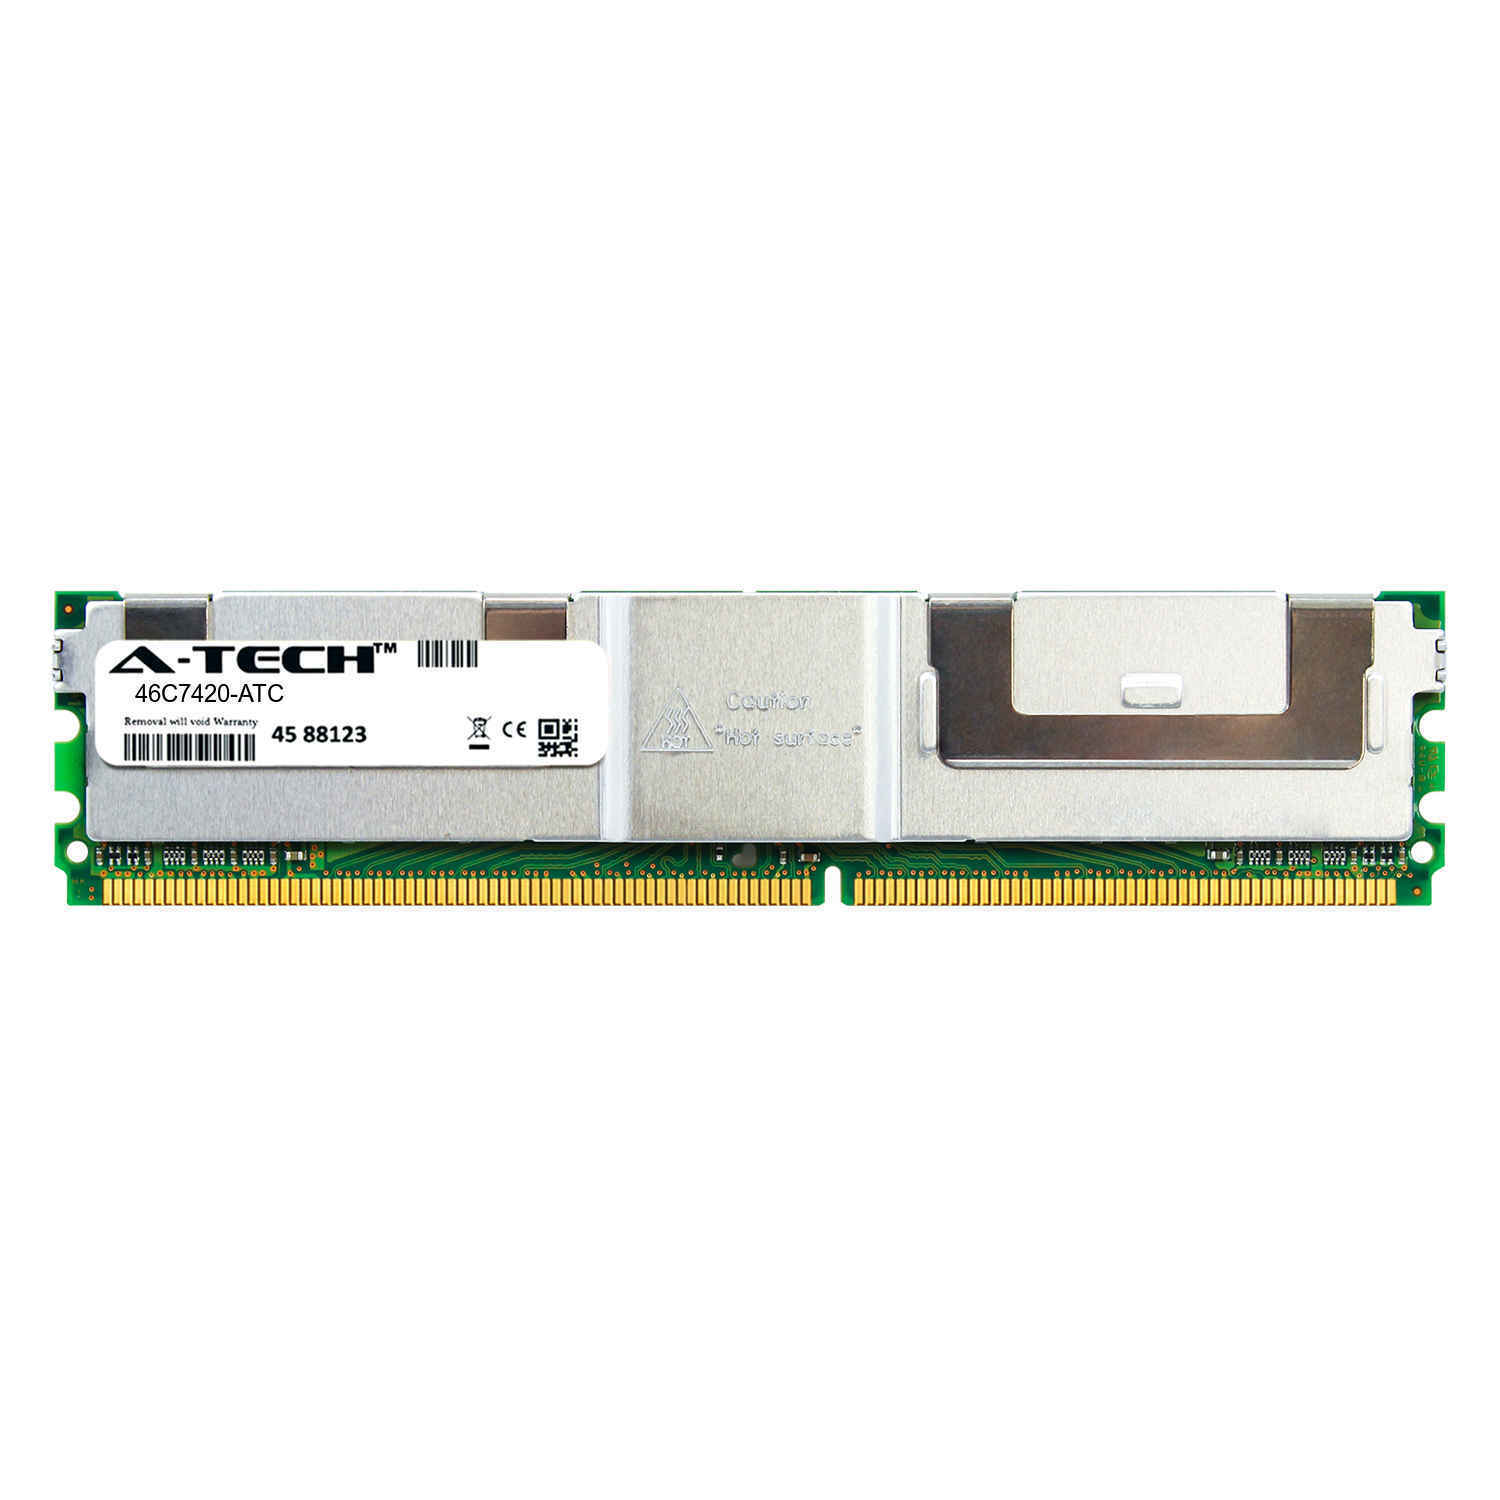 4GB DDR2 PC2-5300F 667MHz FBDIMM (IBM 46C7420 Equivalent) Server Memory RAM